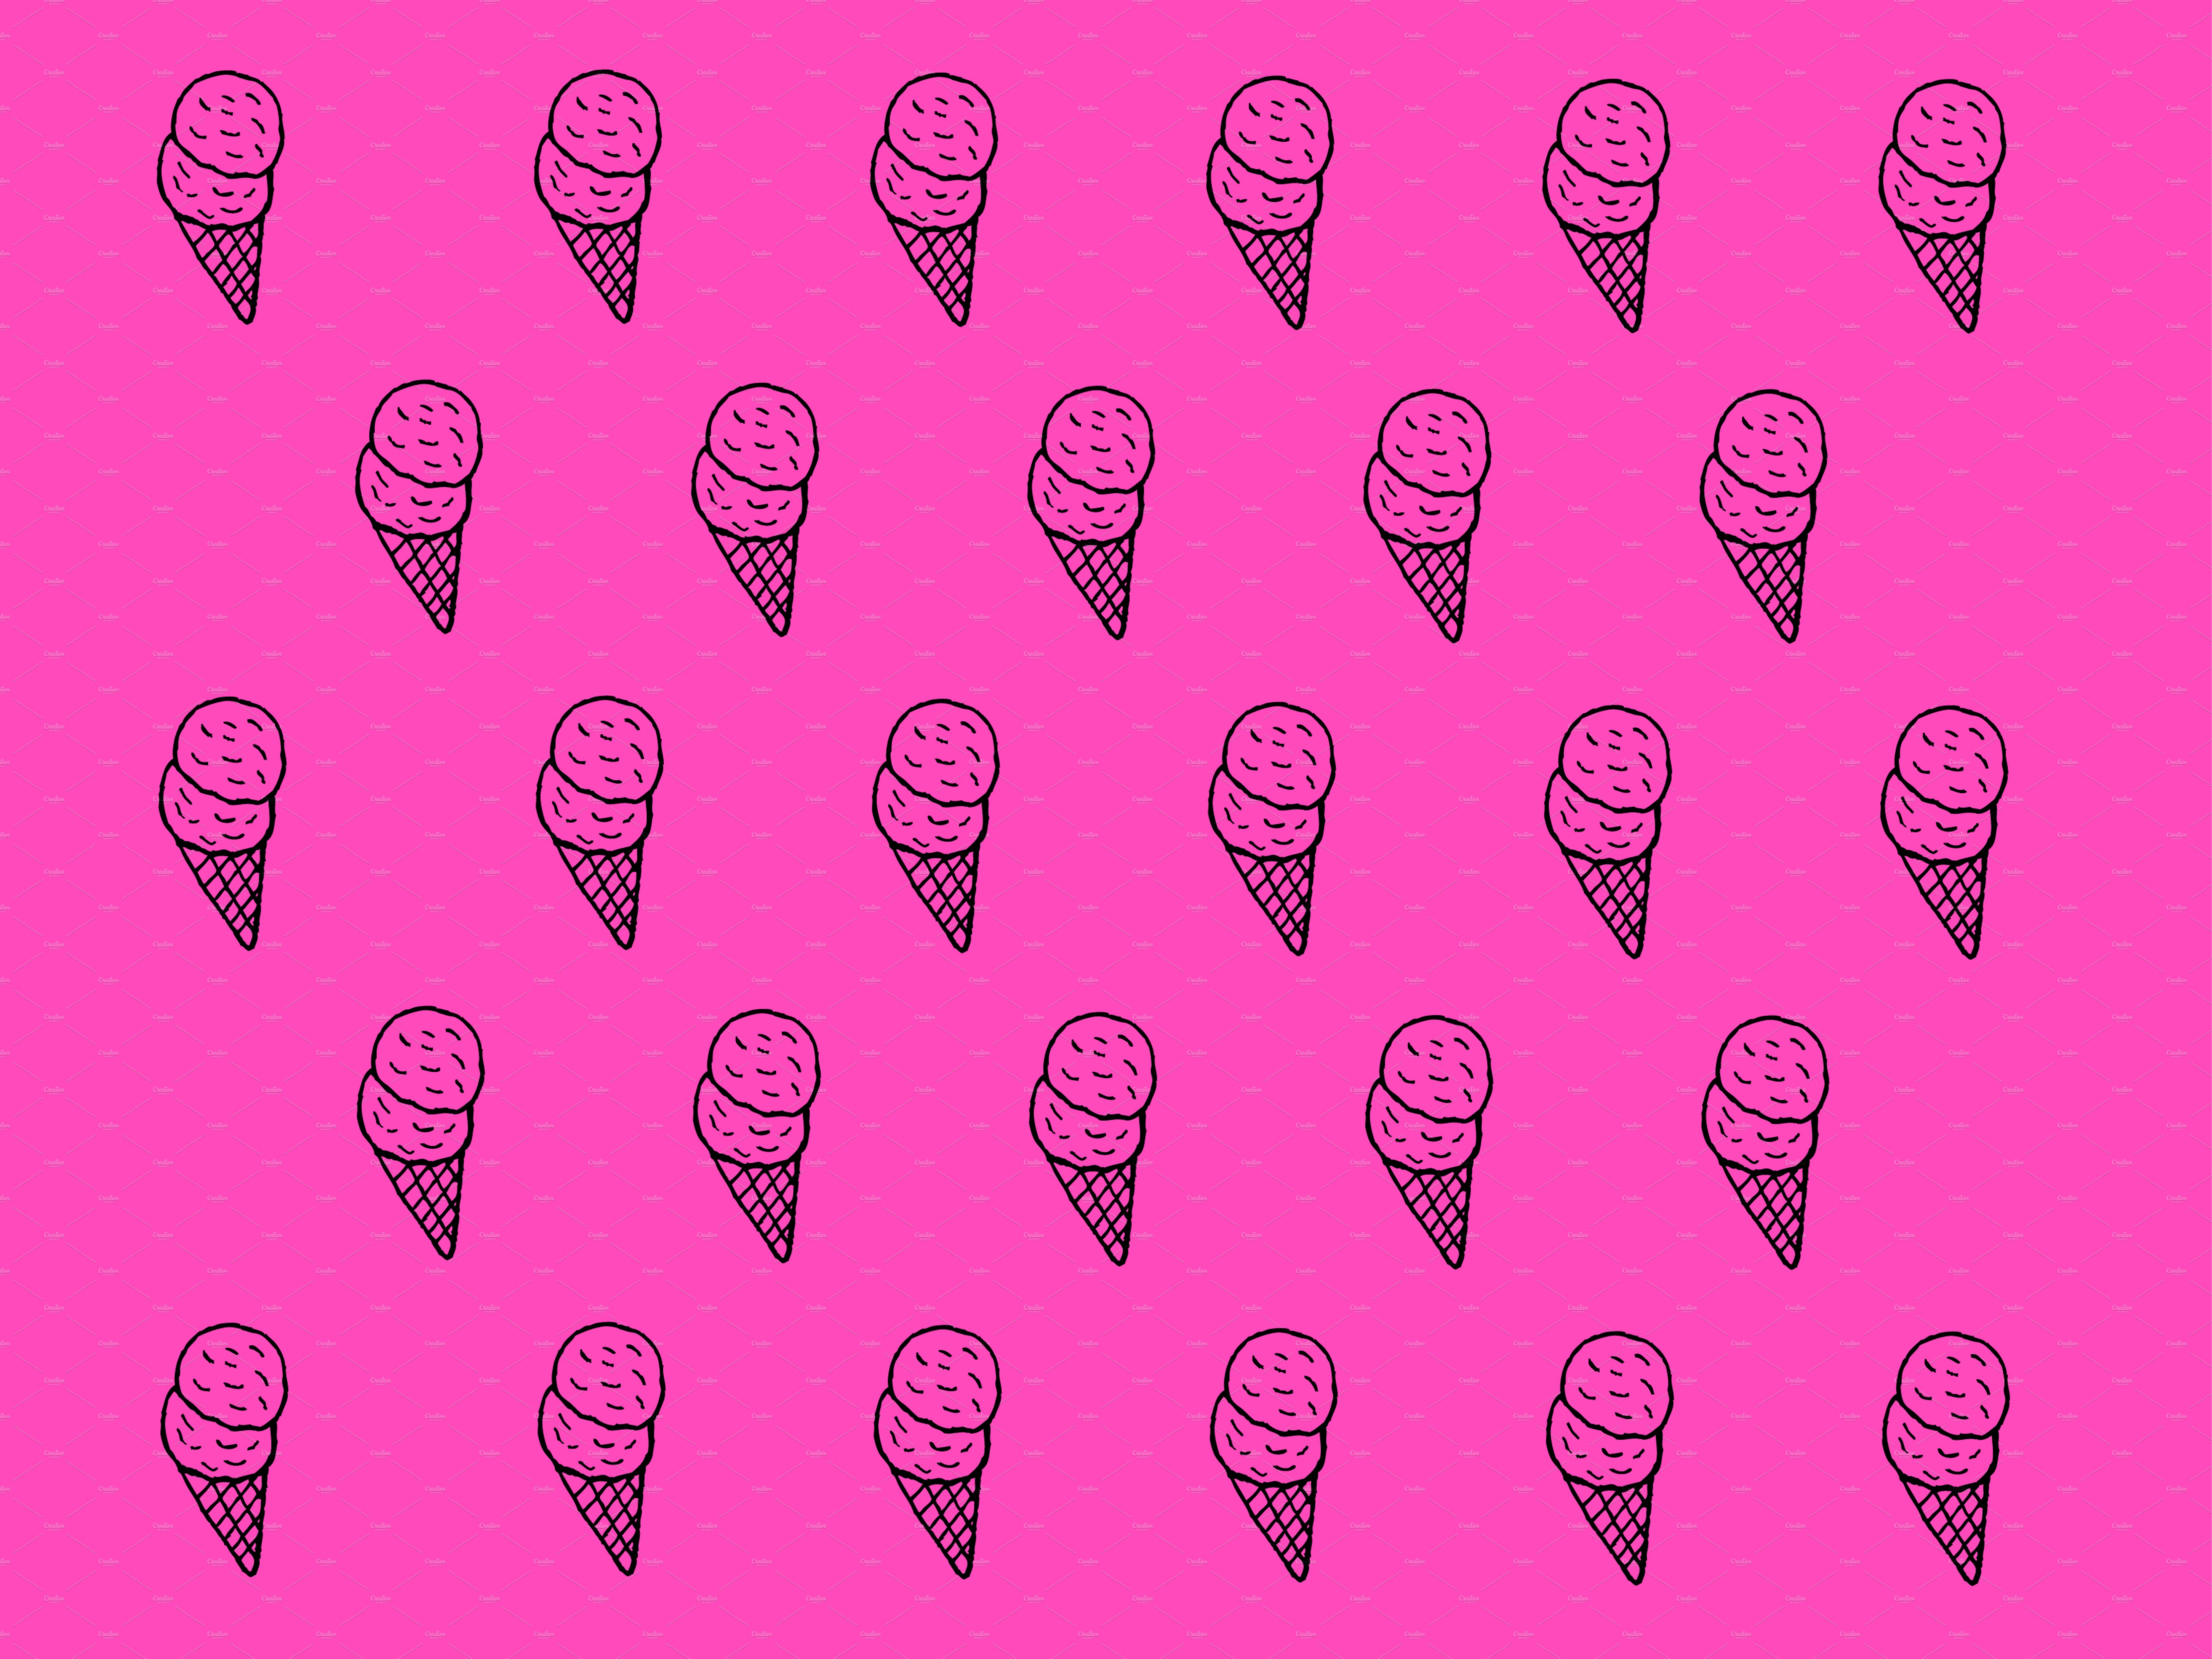 Ice cream pattern cover image.